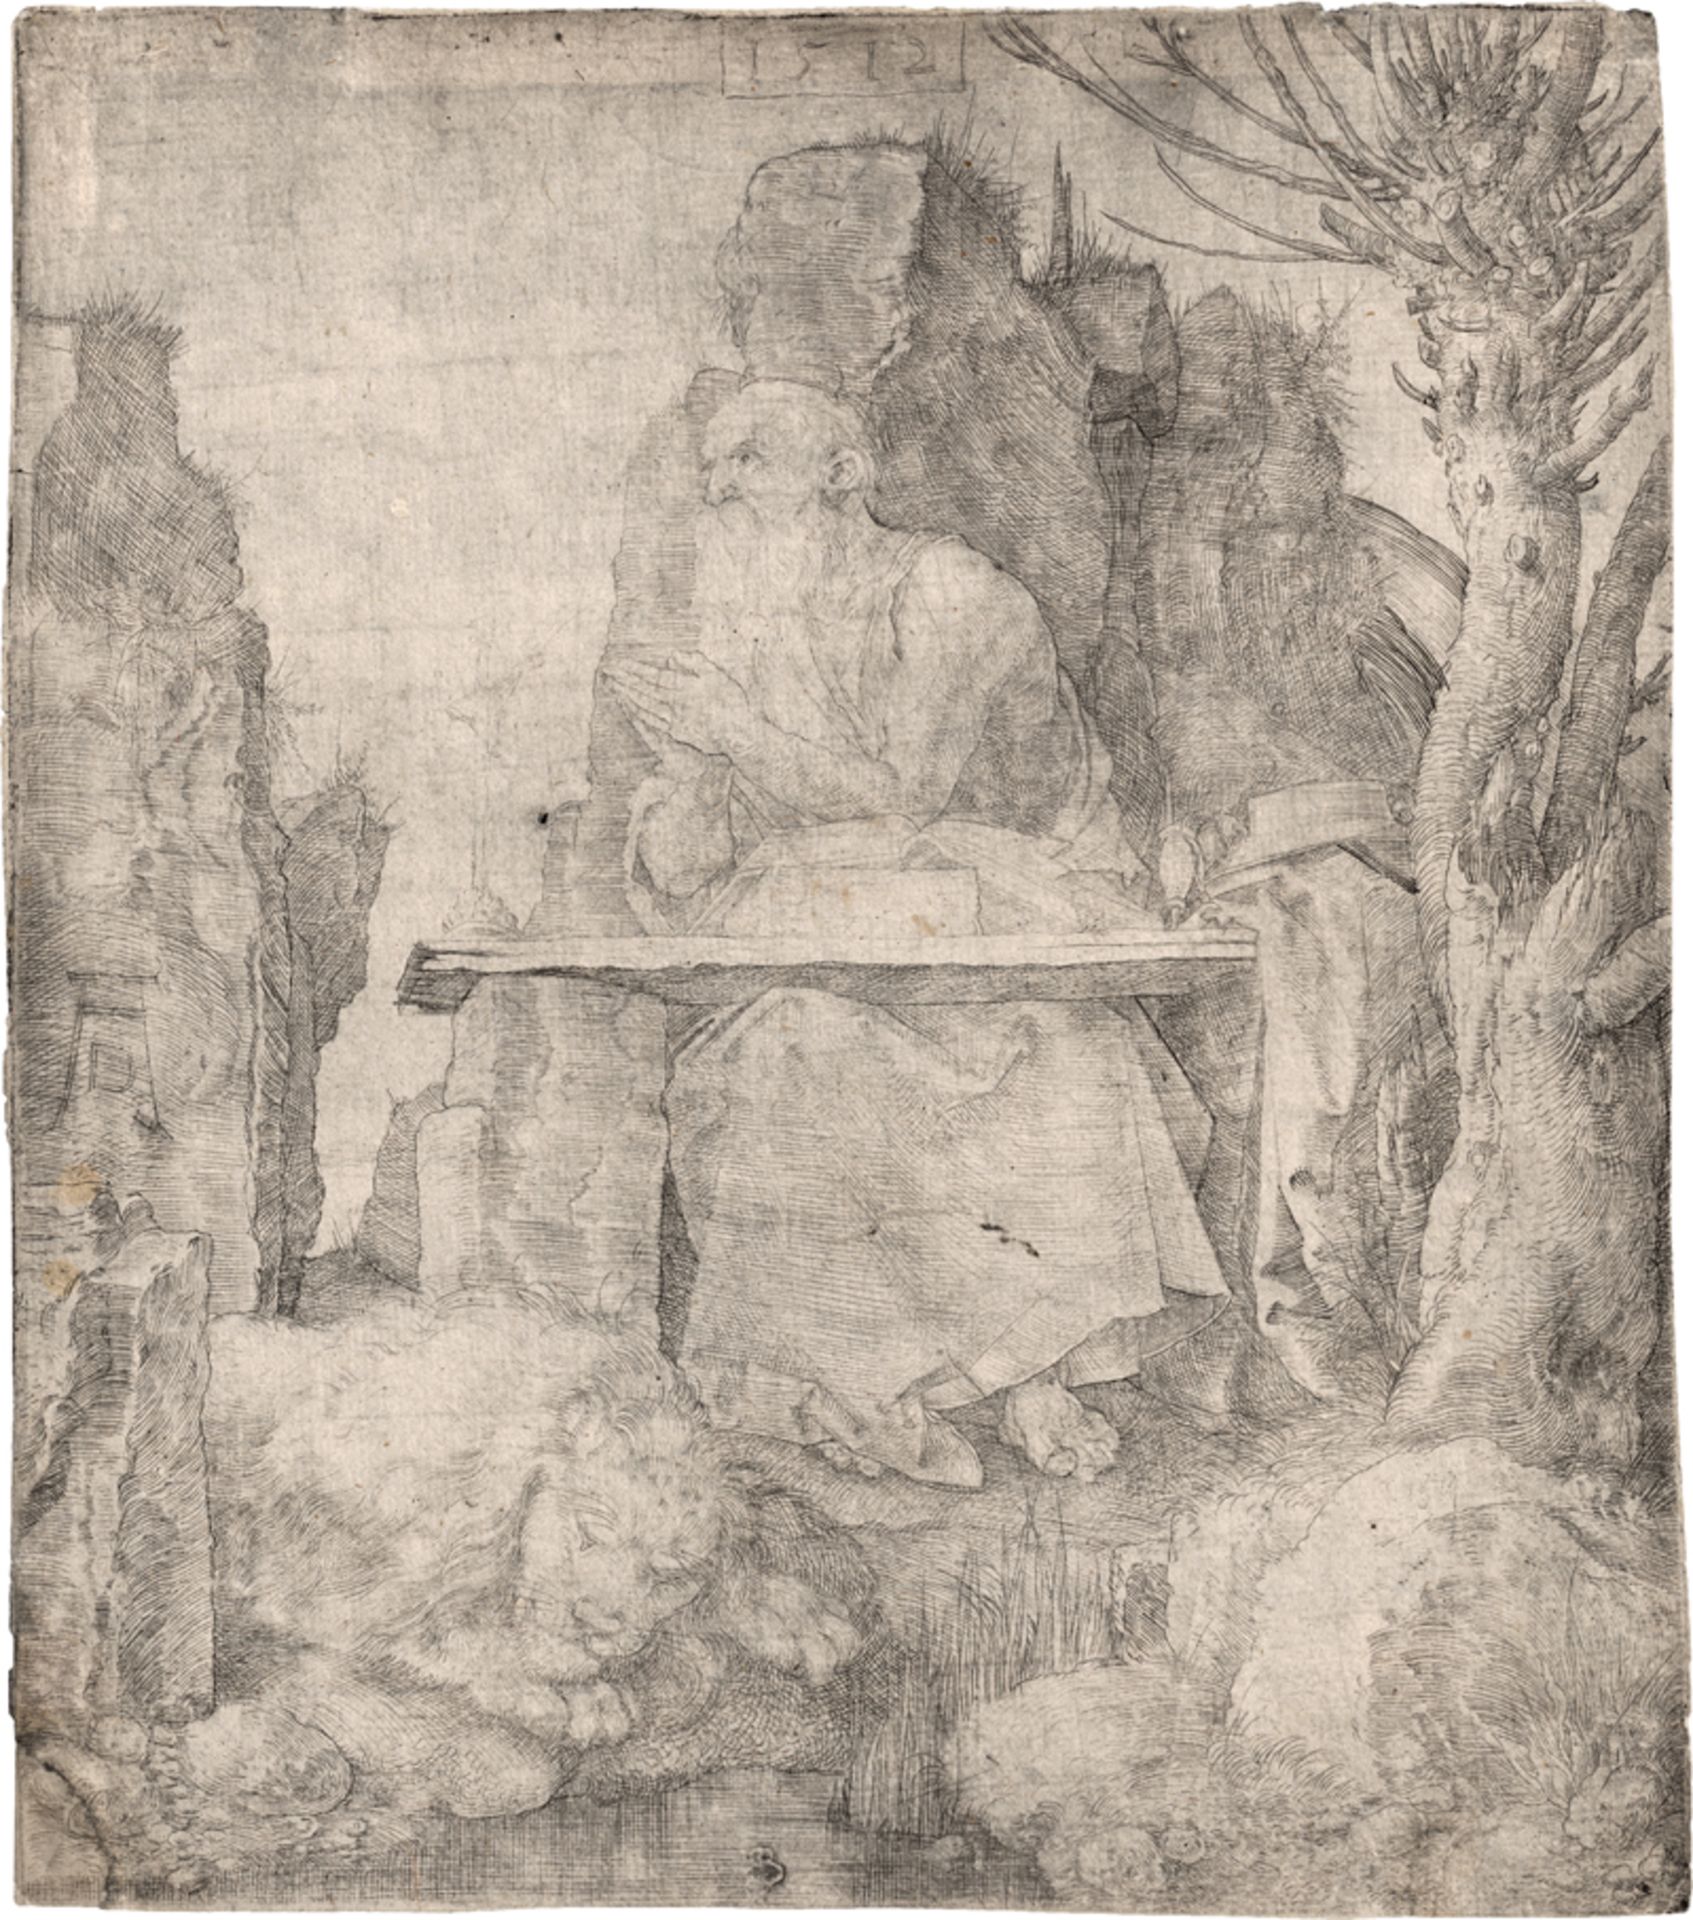 Dürer, Albrecht: Der hl. Hieronymus neben dem Weidenbaum